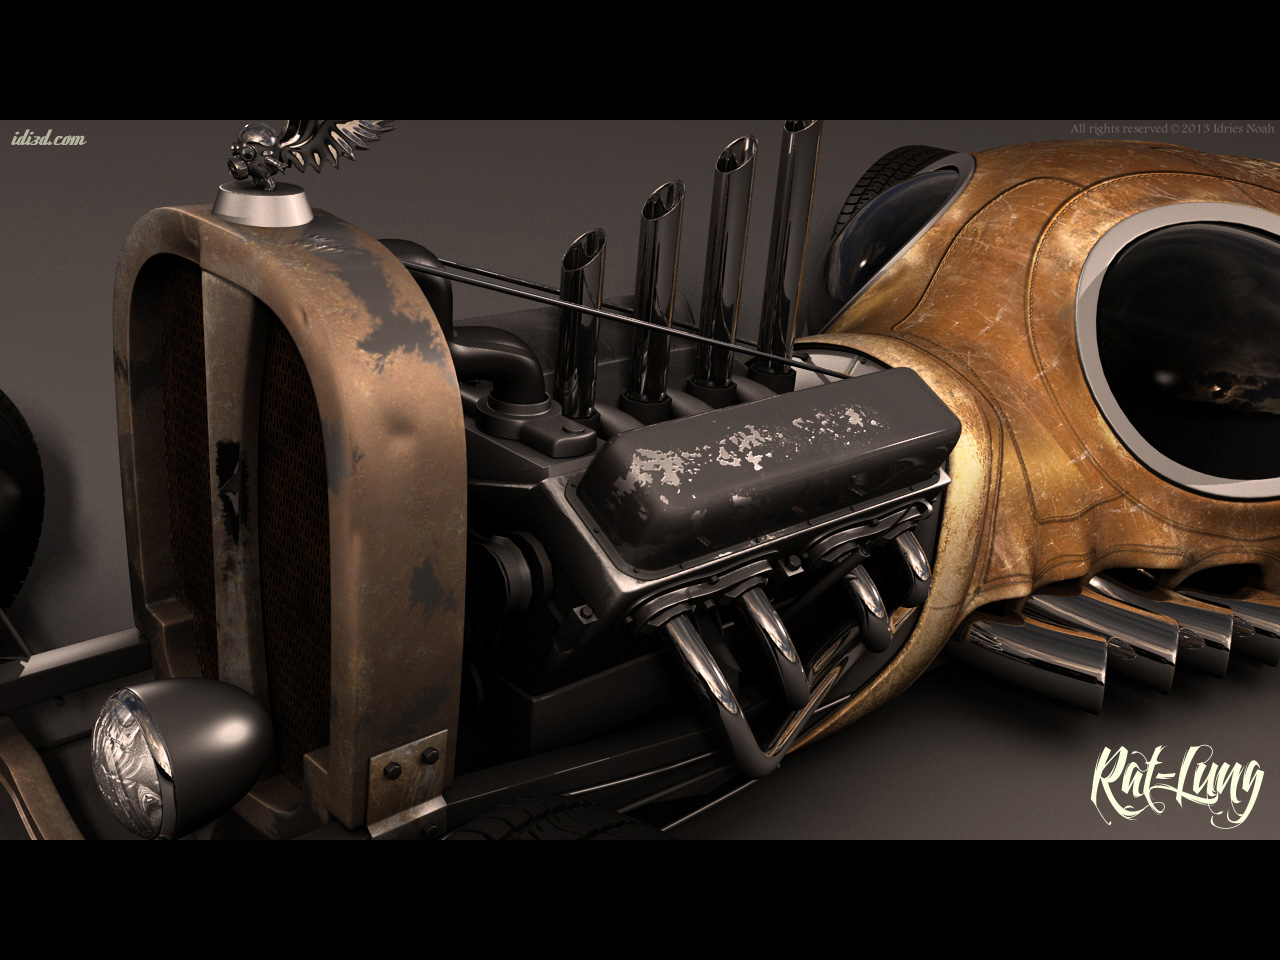 Rat-Lung Hot Rod Concept by Idries Noah